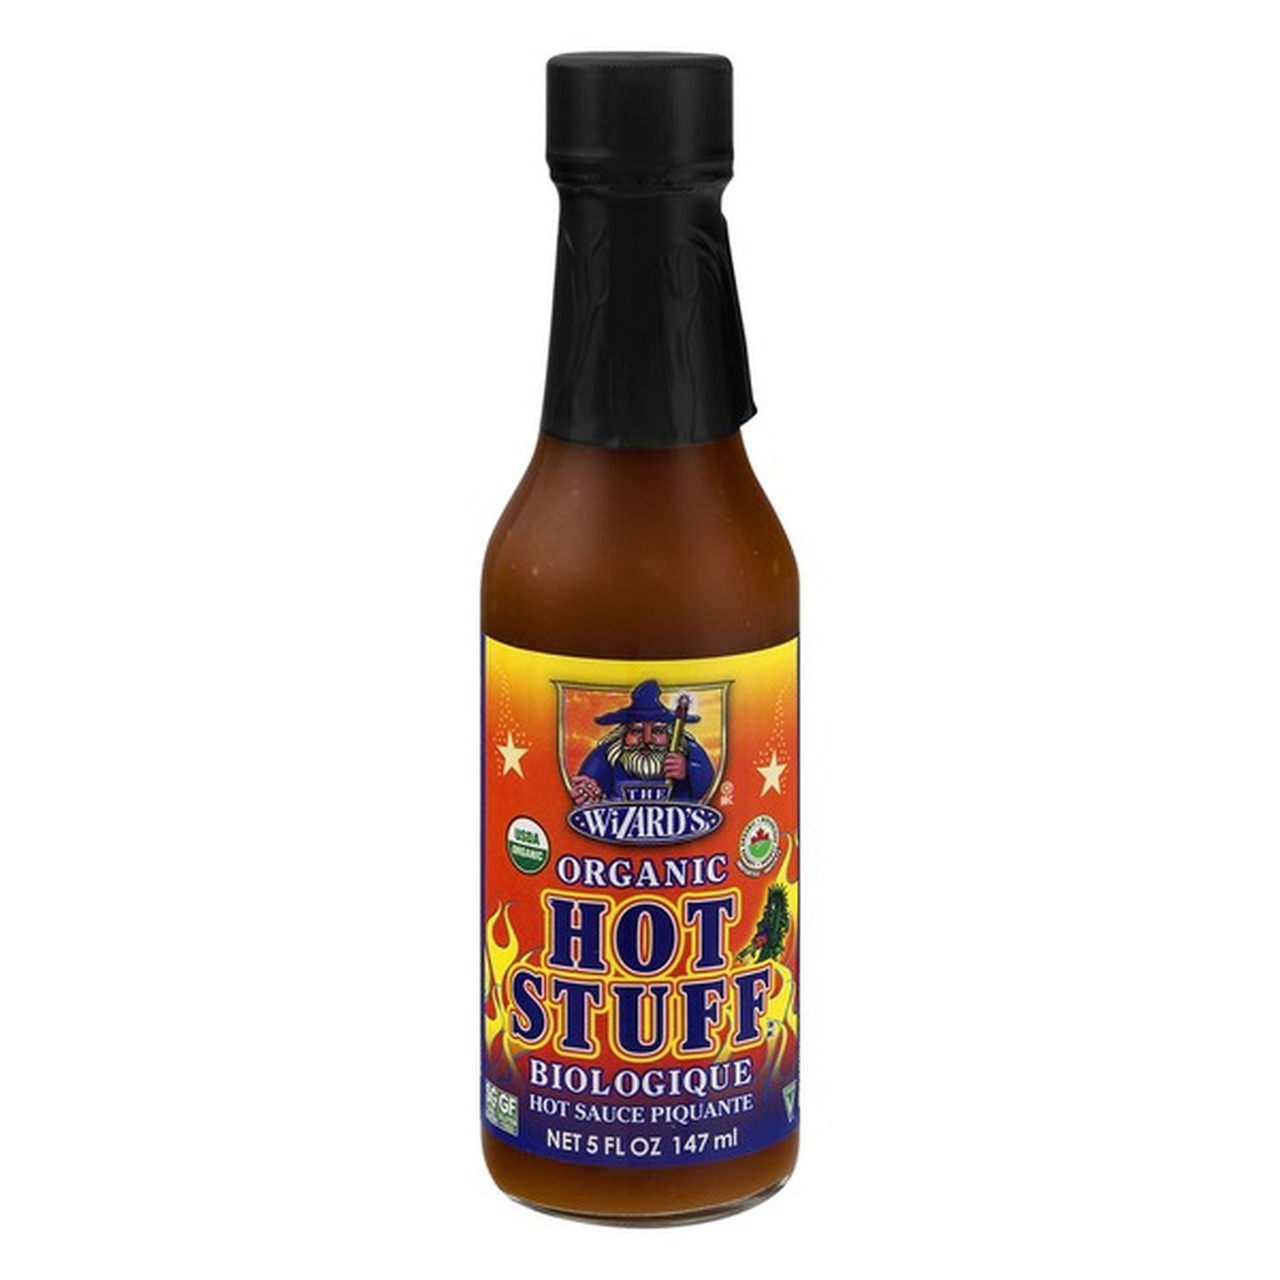 The Wizard's Organic Hot Stuff Hot Sauce 147ml